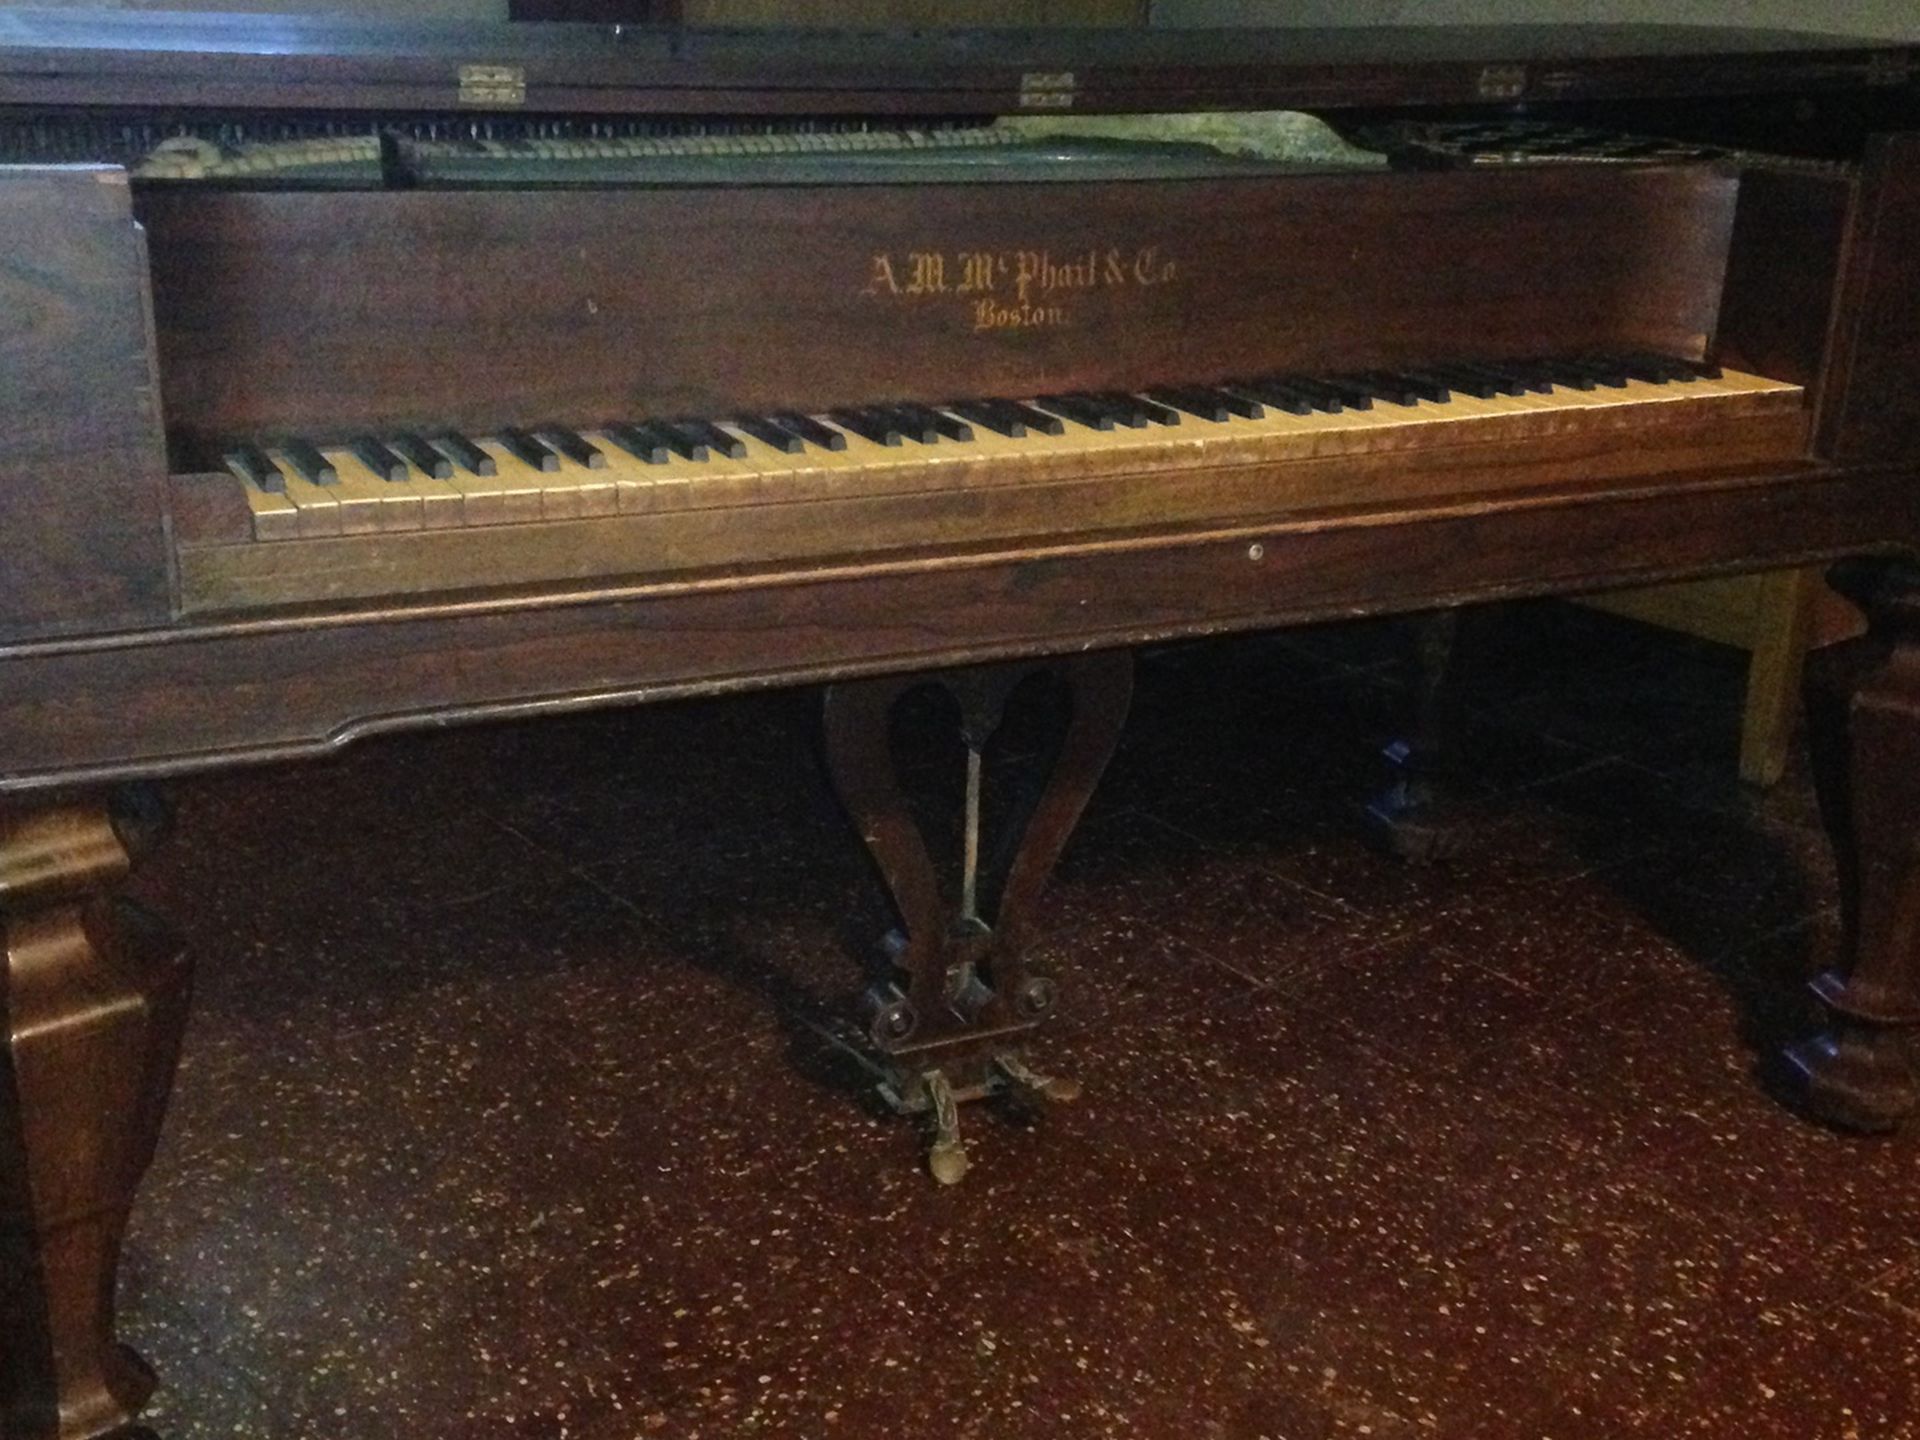 FREE 1888 A.M. Mc Phail & Co Boston Piano